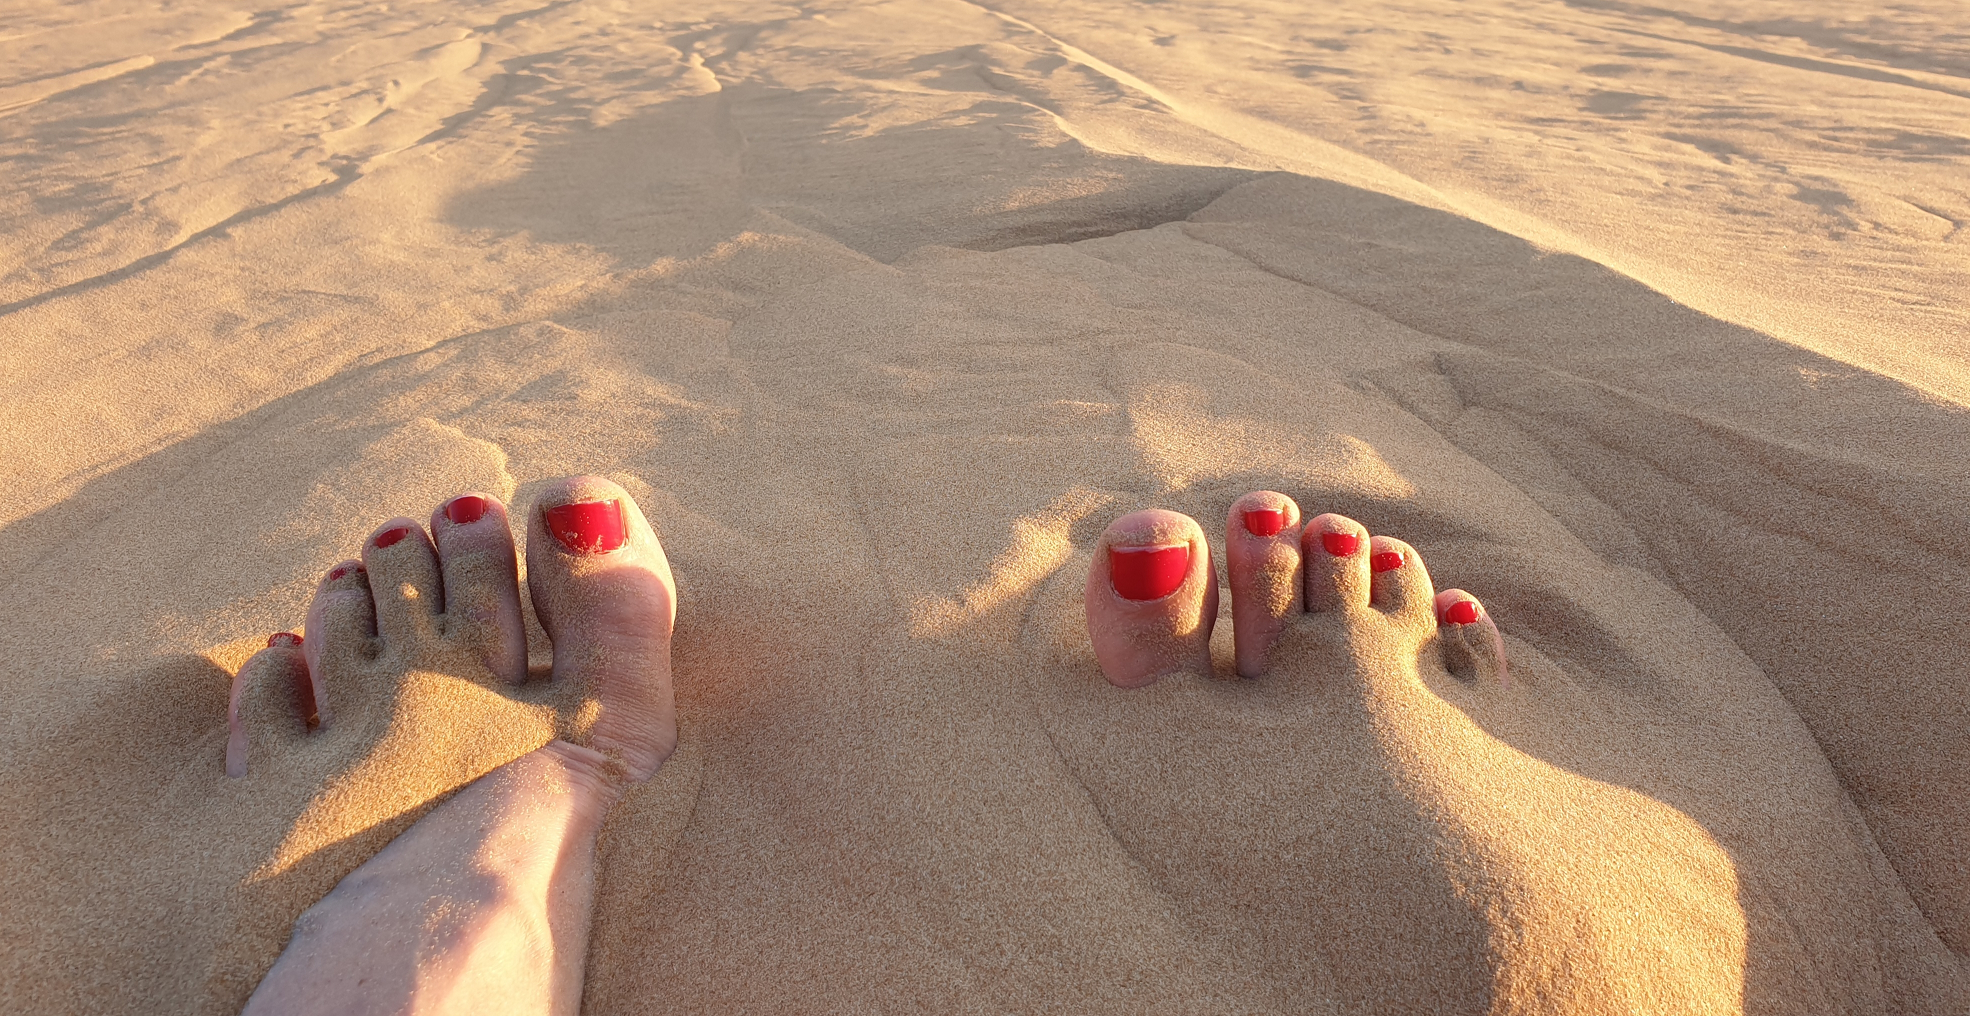 Feet in Abu Dhabi sand